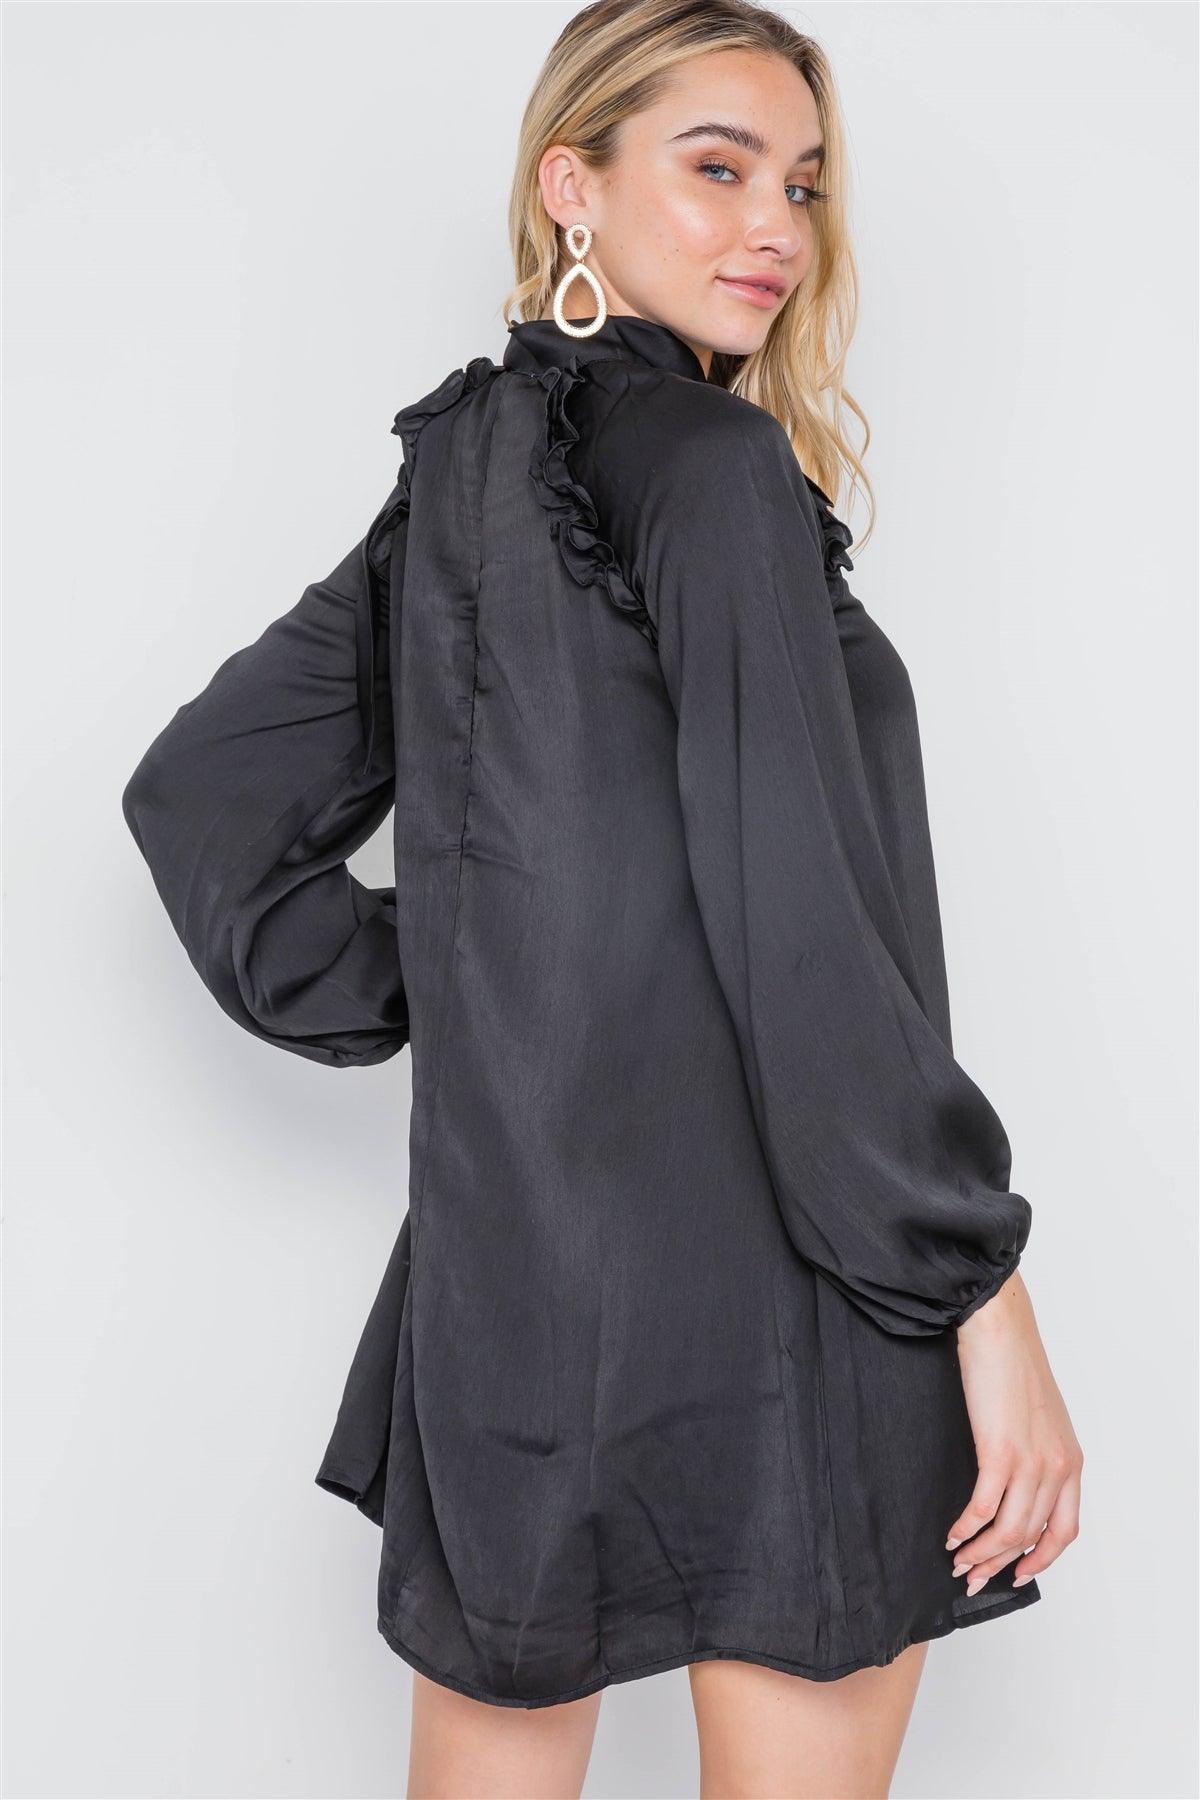 Black Satin Long Balloon Puff Sleeve Side-Tie Mini Dress /2-3-2